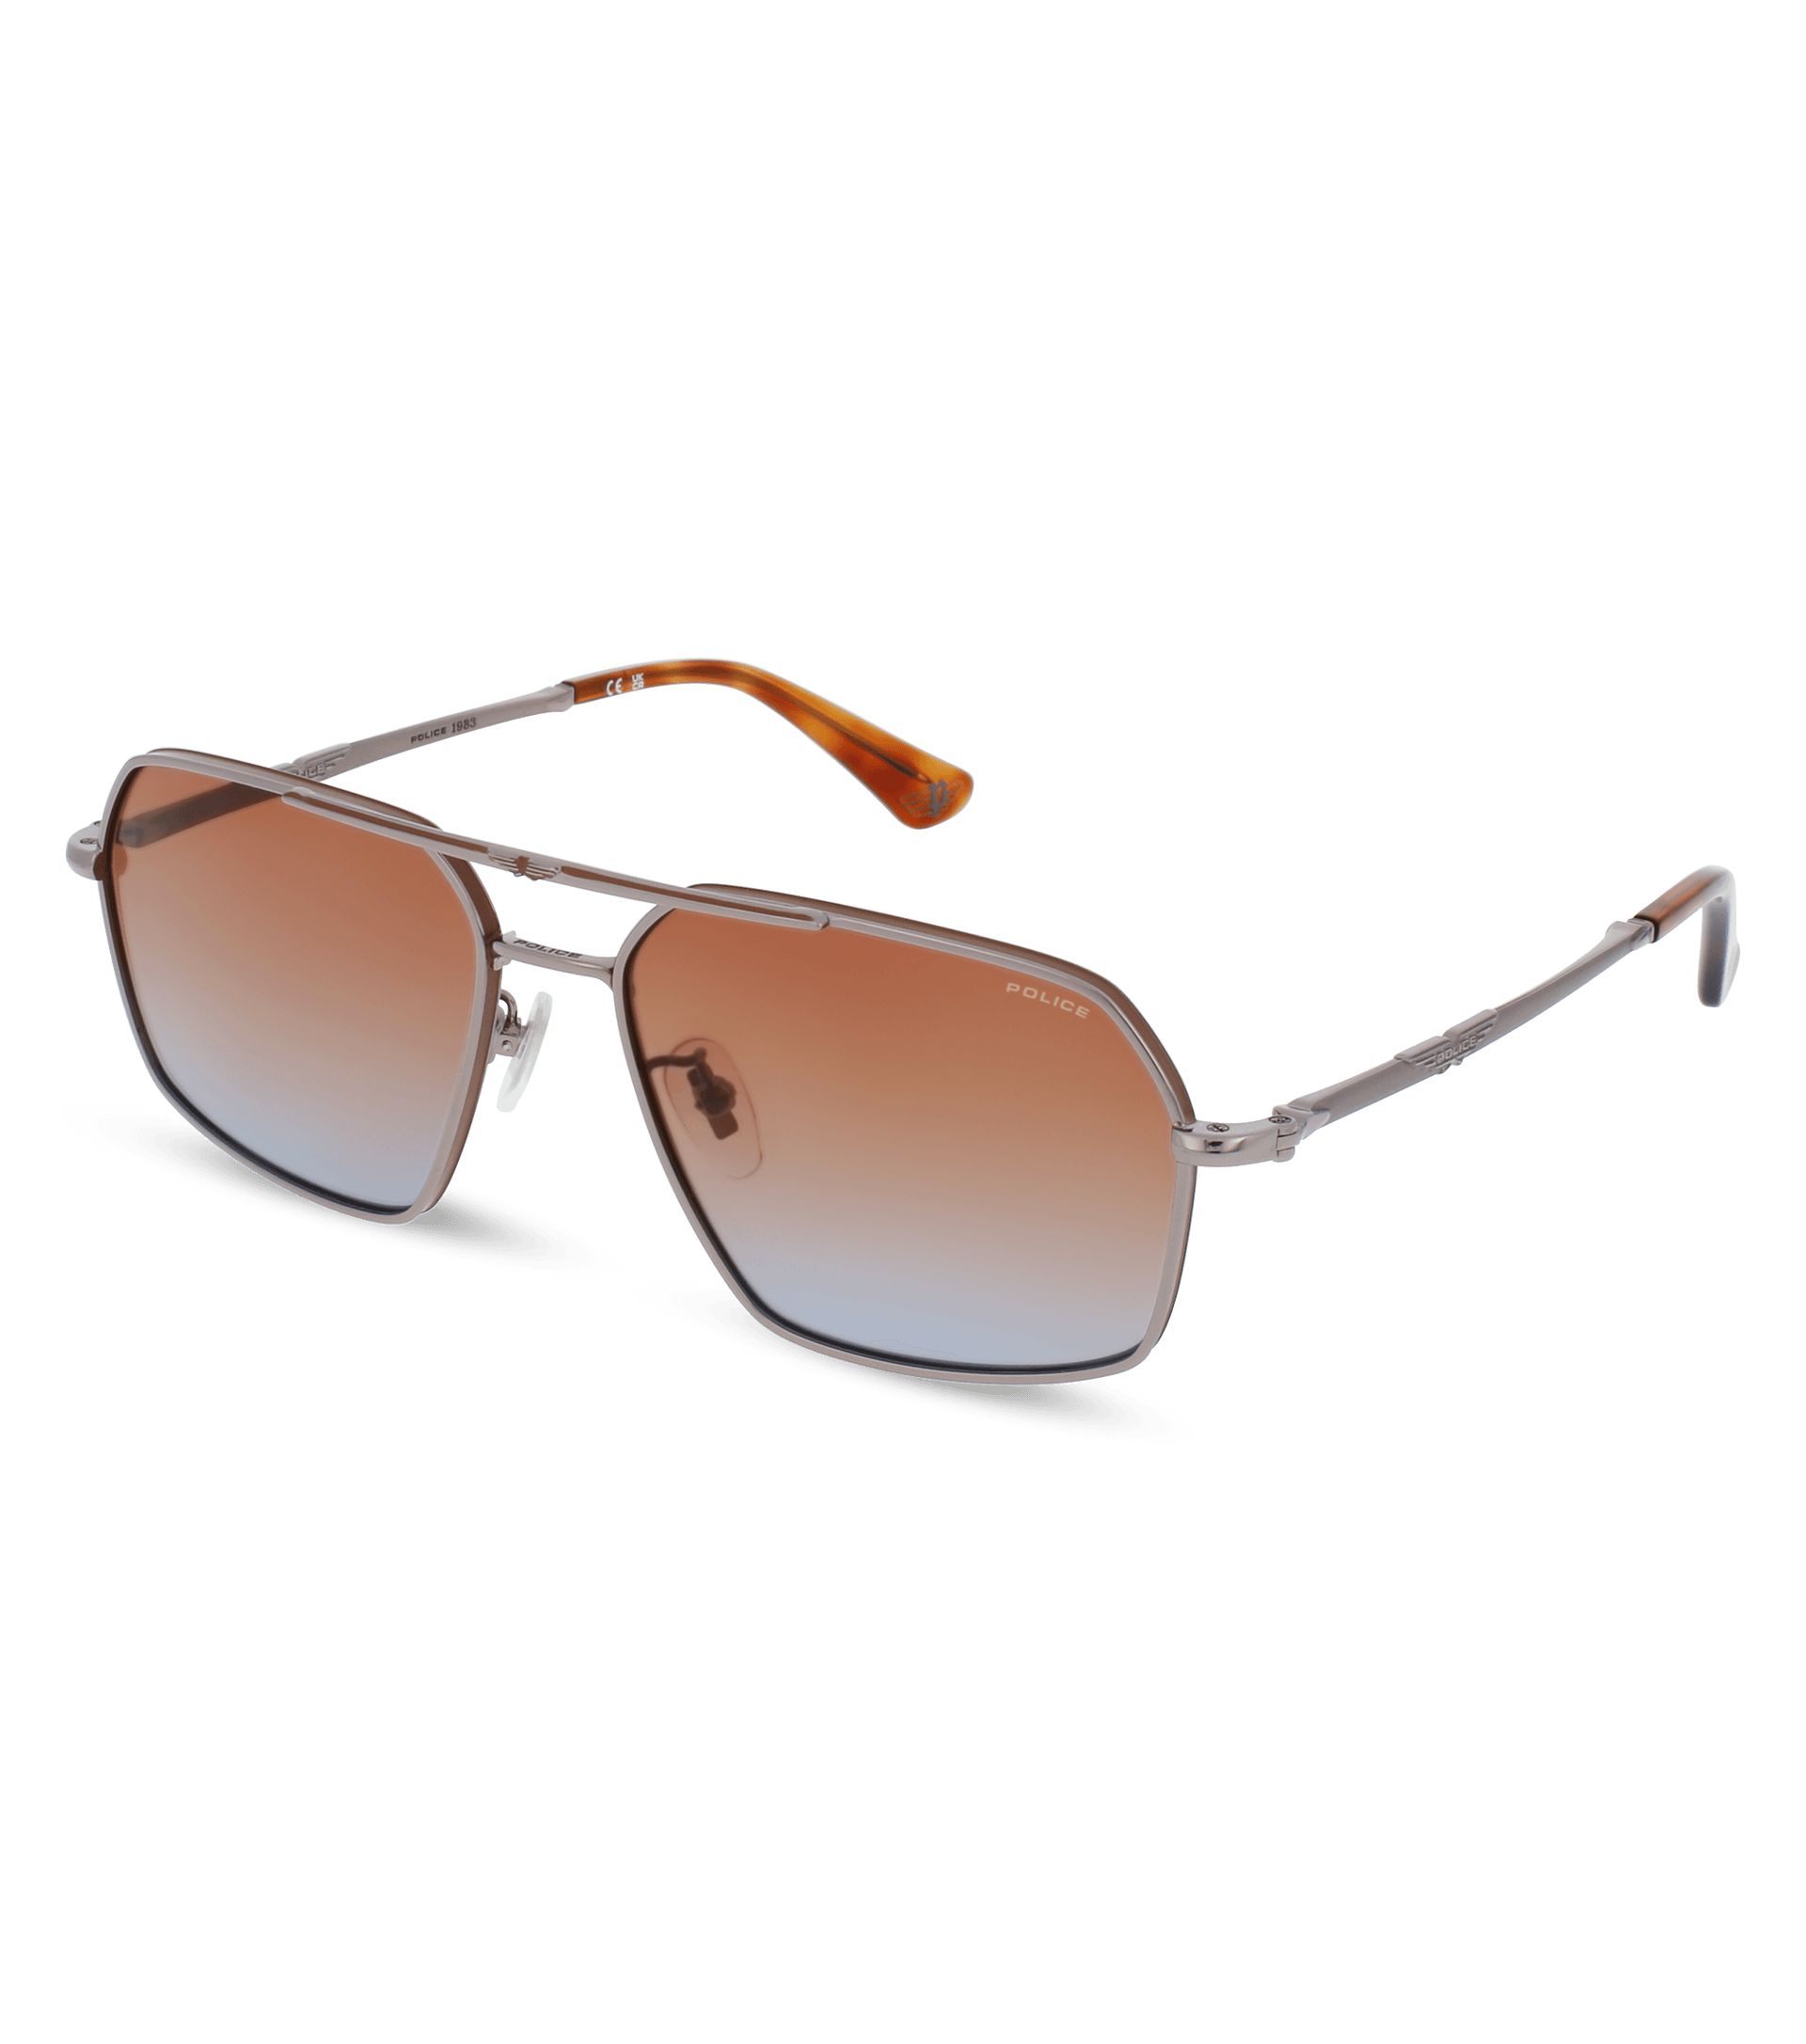 Police sunglasses - Origins Classic 2 Man Sunglasses Police SPLL86 Rose  gold, Green